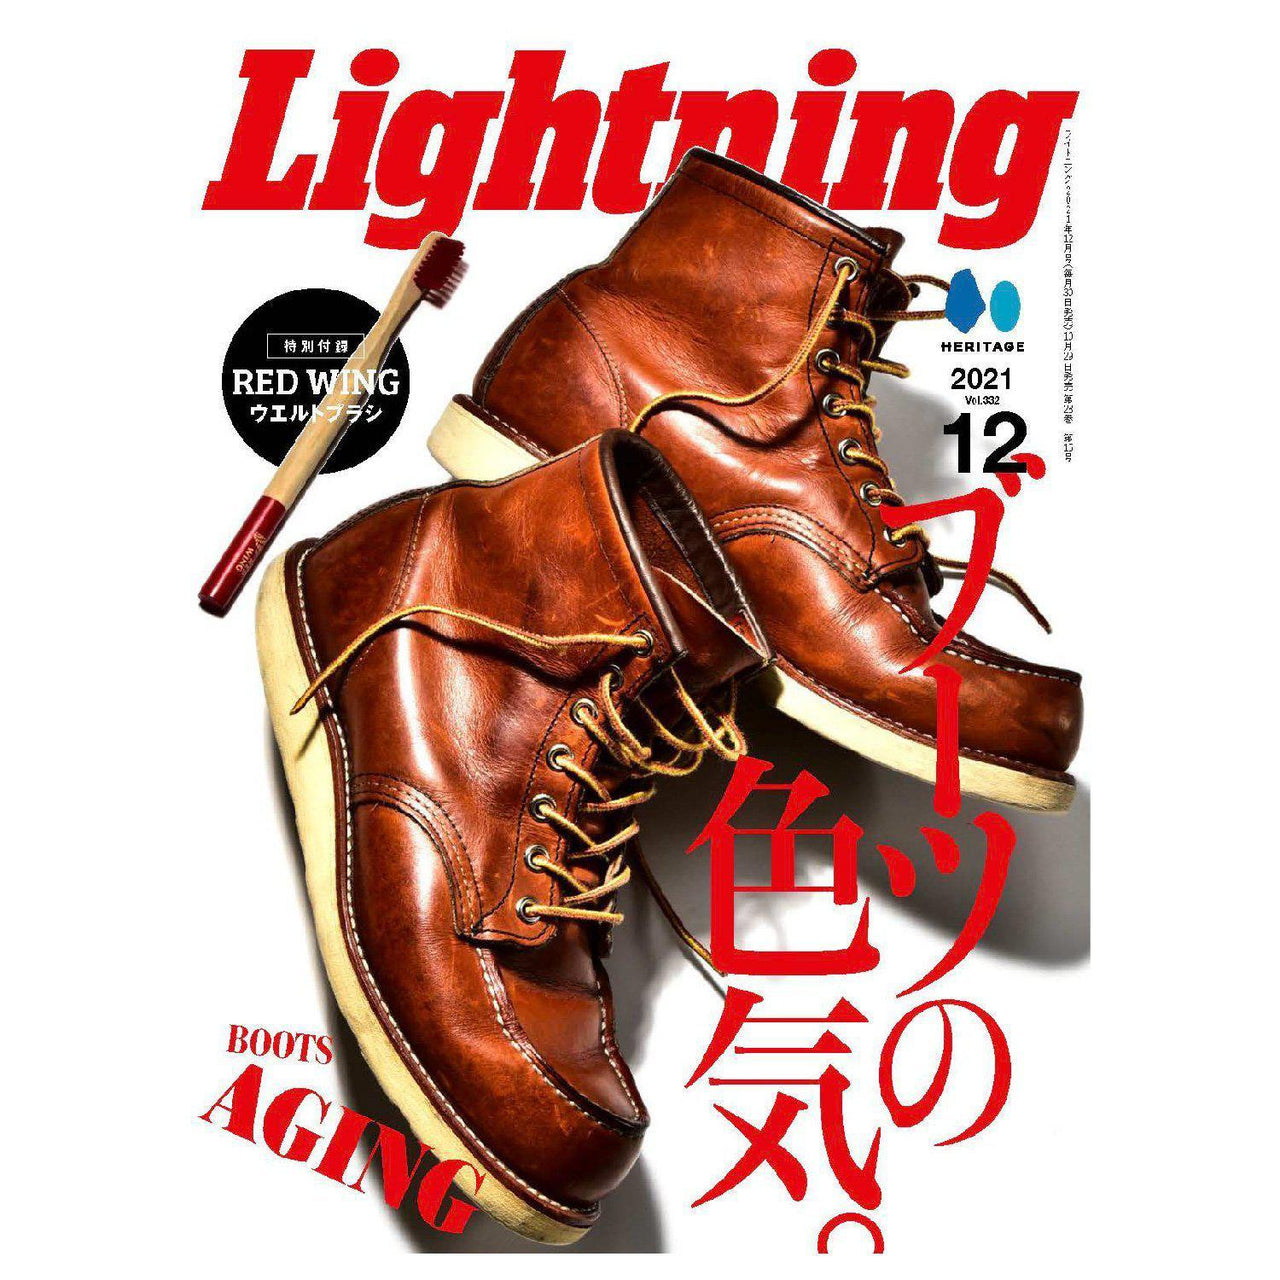 Lightning Vol.331 "SEXY" BOOTS-Magazine-Clutch Cafe